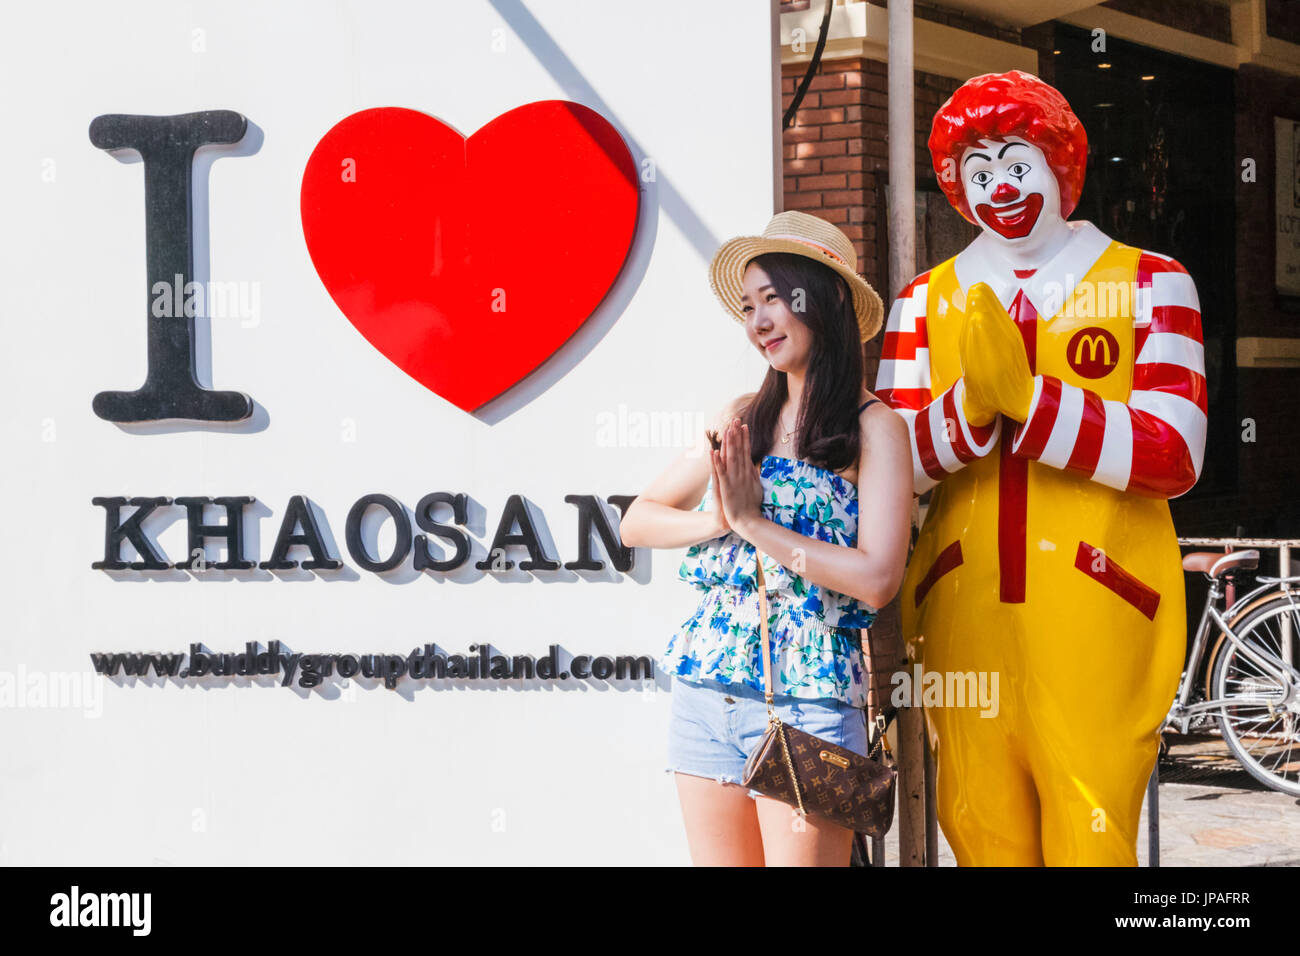 Thailandia, Bangkok, Khaosan Road, Femmina turistici asiatici che posano per una foto souvenir Foto Stock